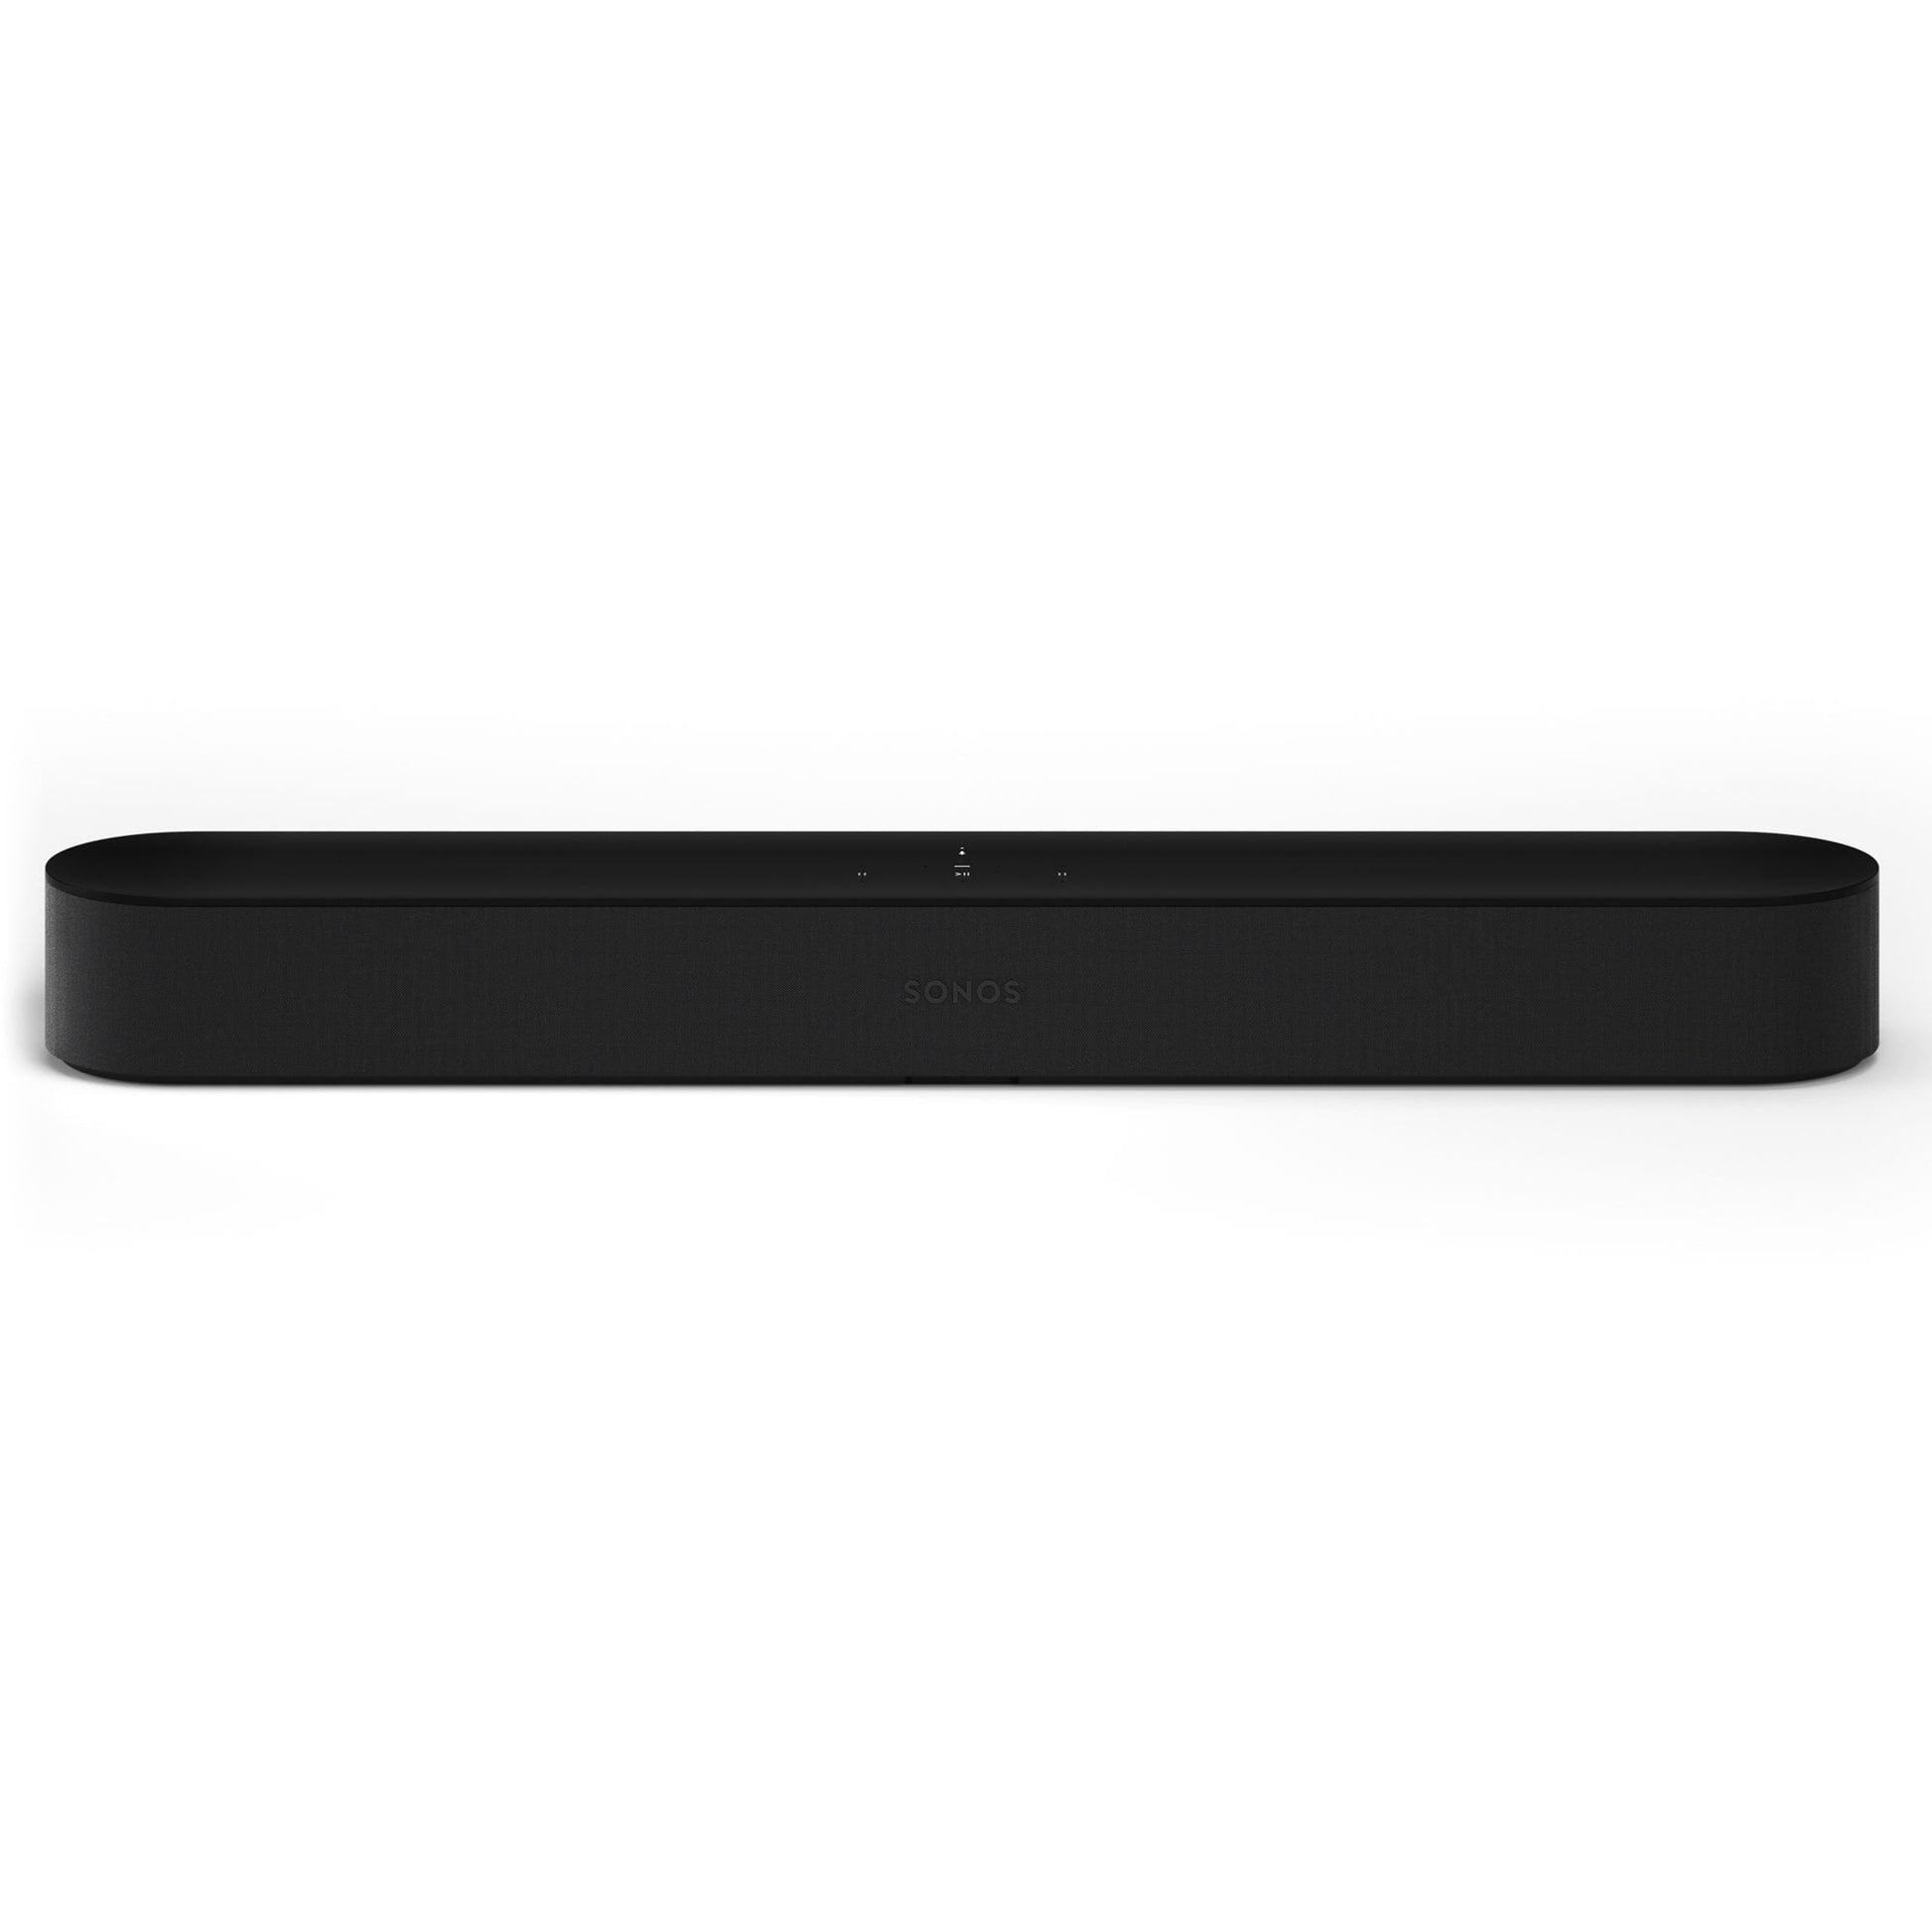 Sonos Beam (Black) - Front View